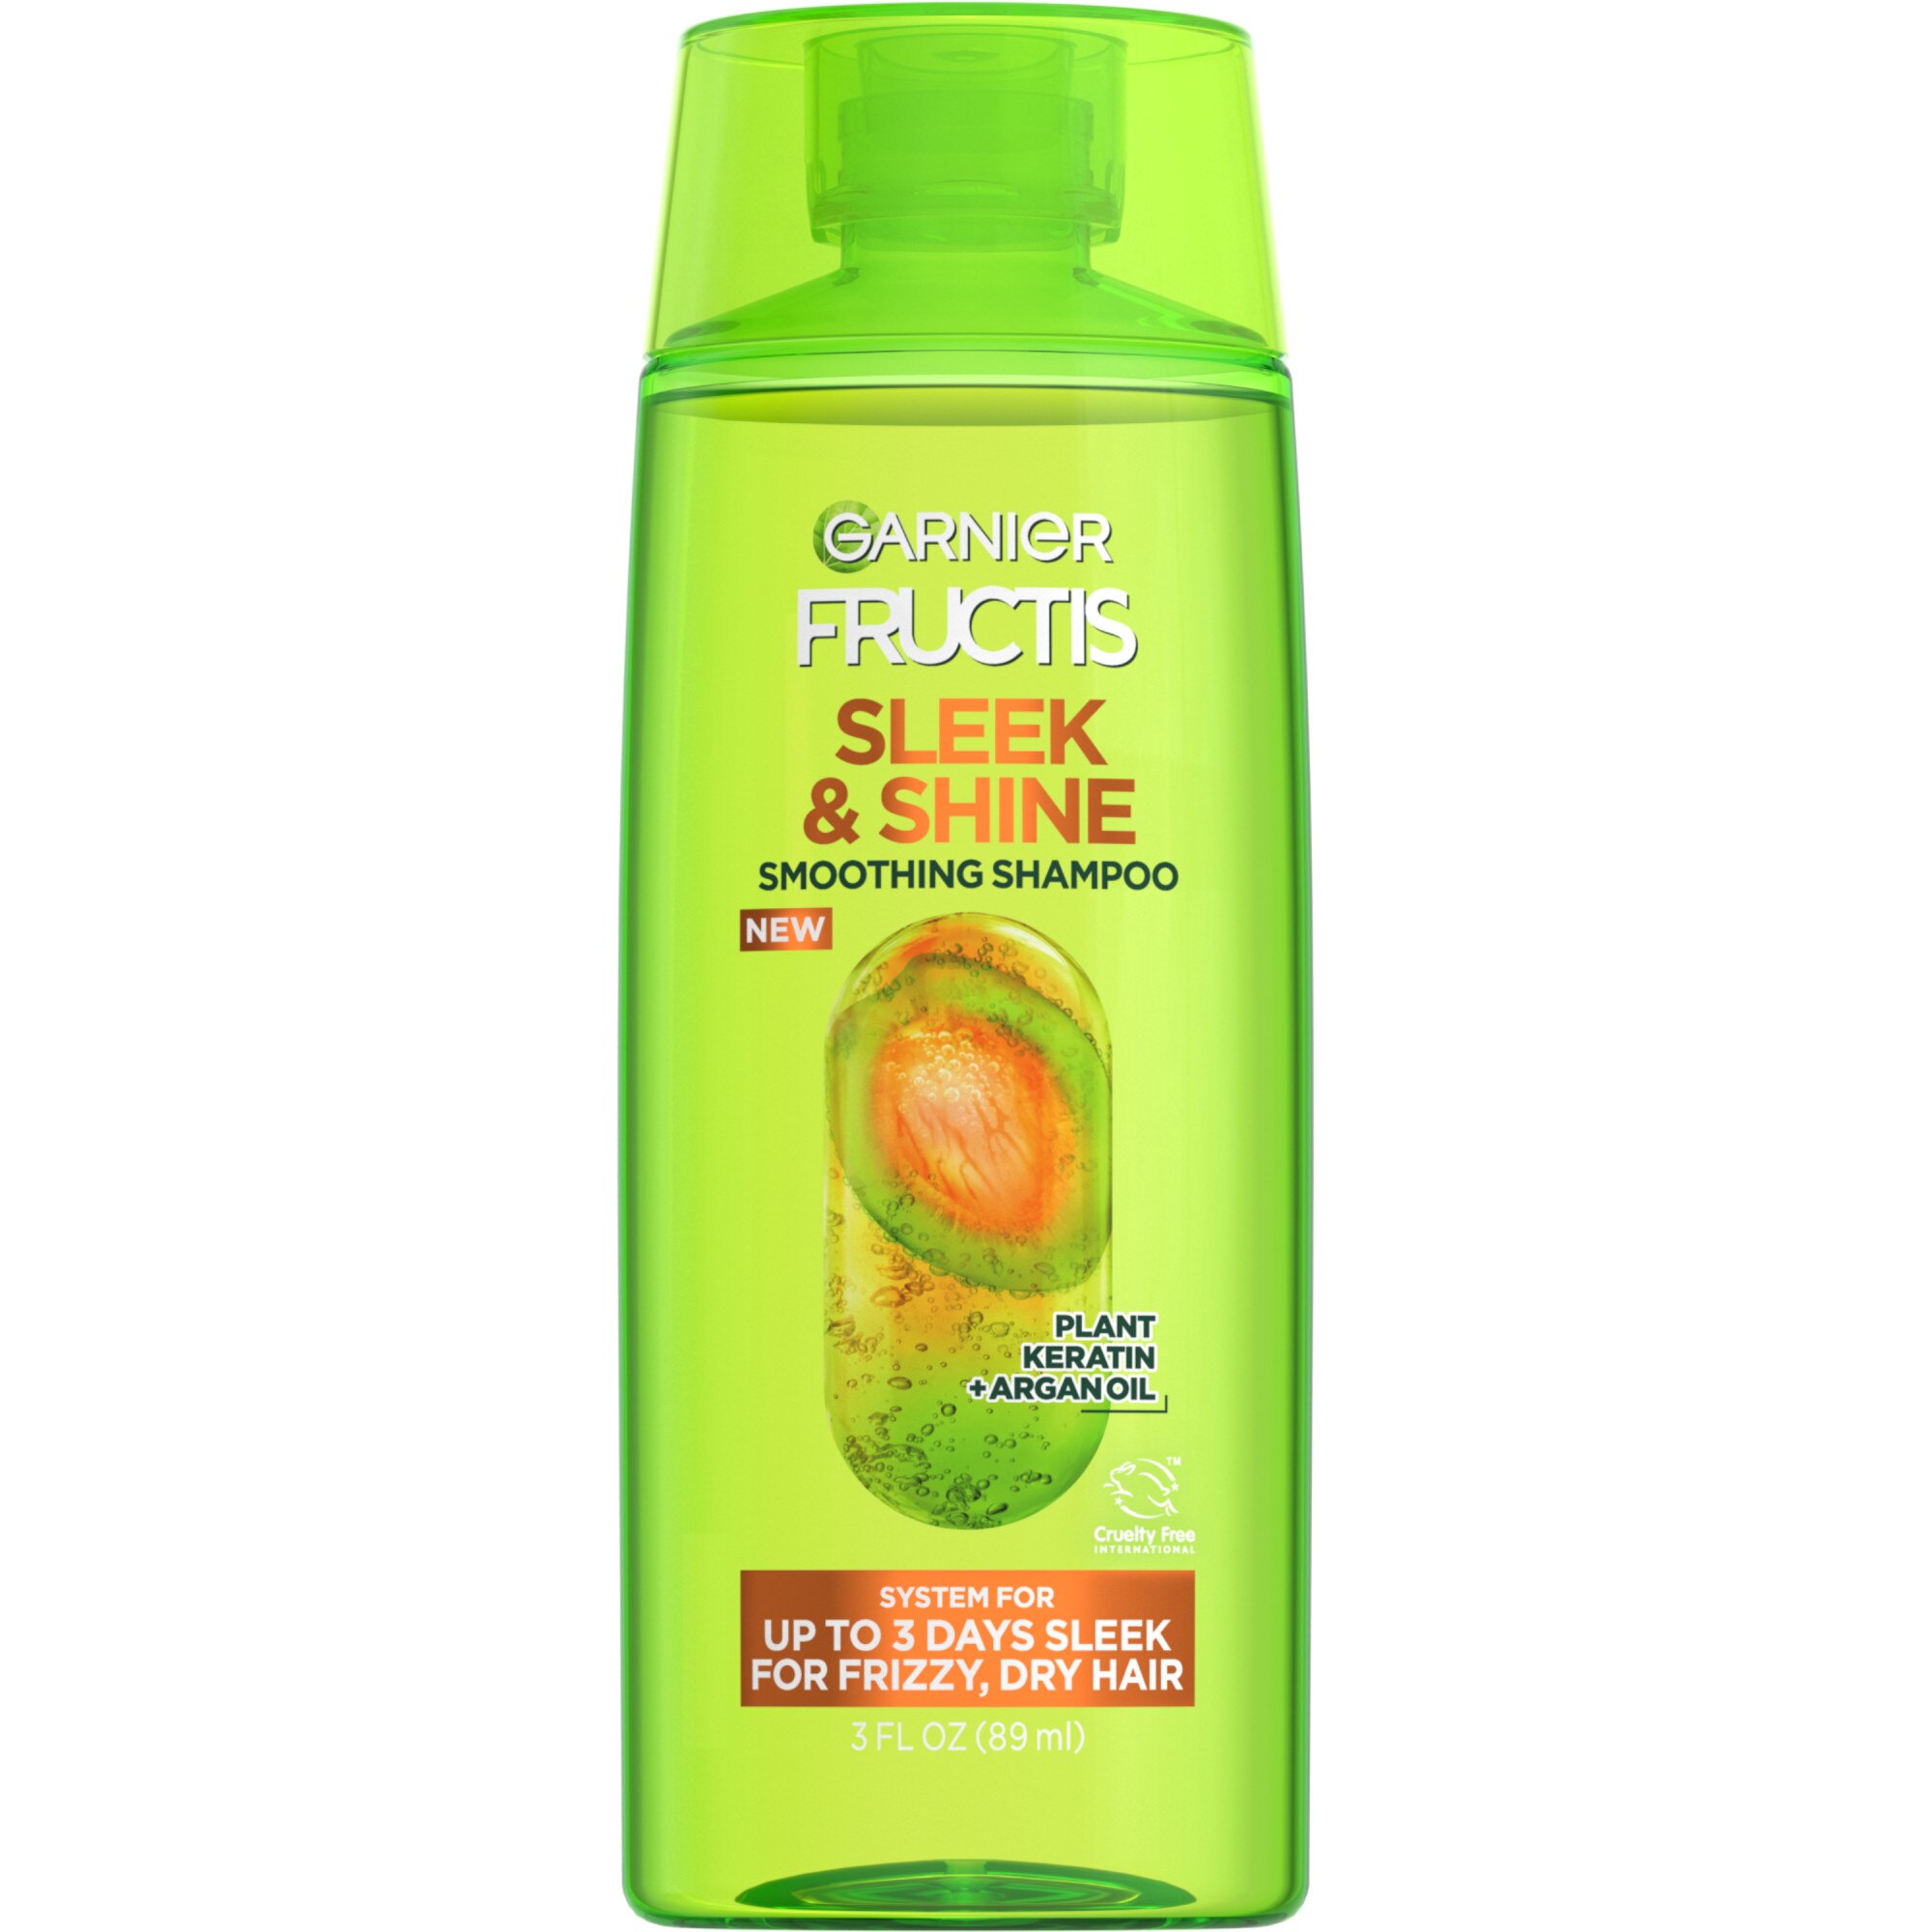 Sleek & Size Trial Fructis Shine Garnier 3 Shampoo, OZ